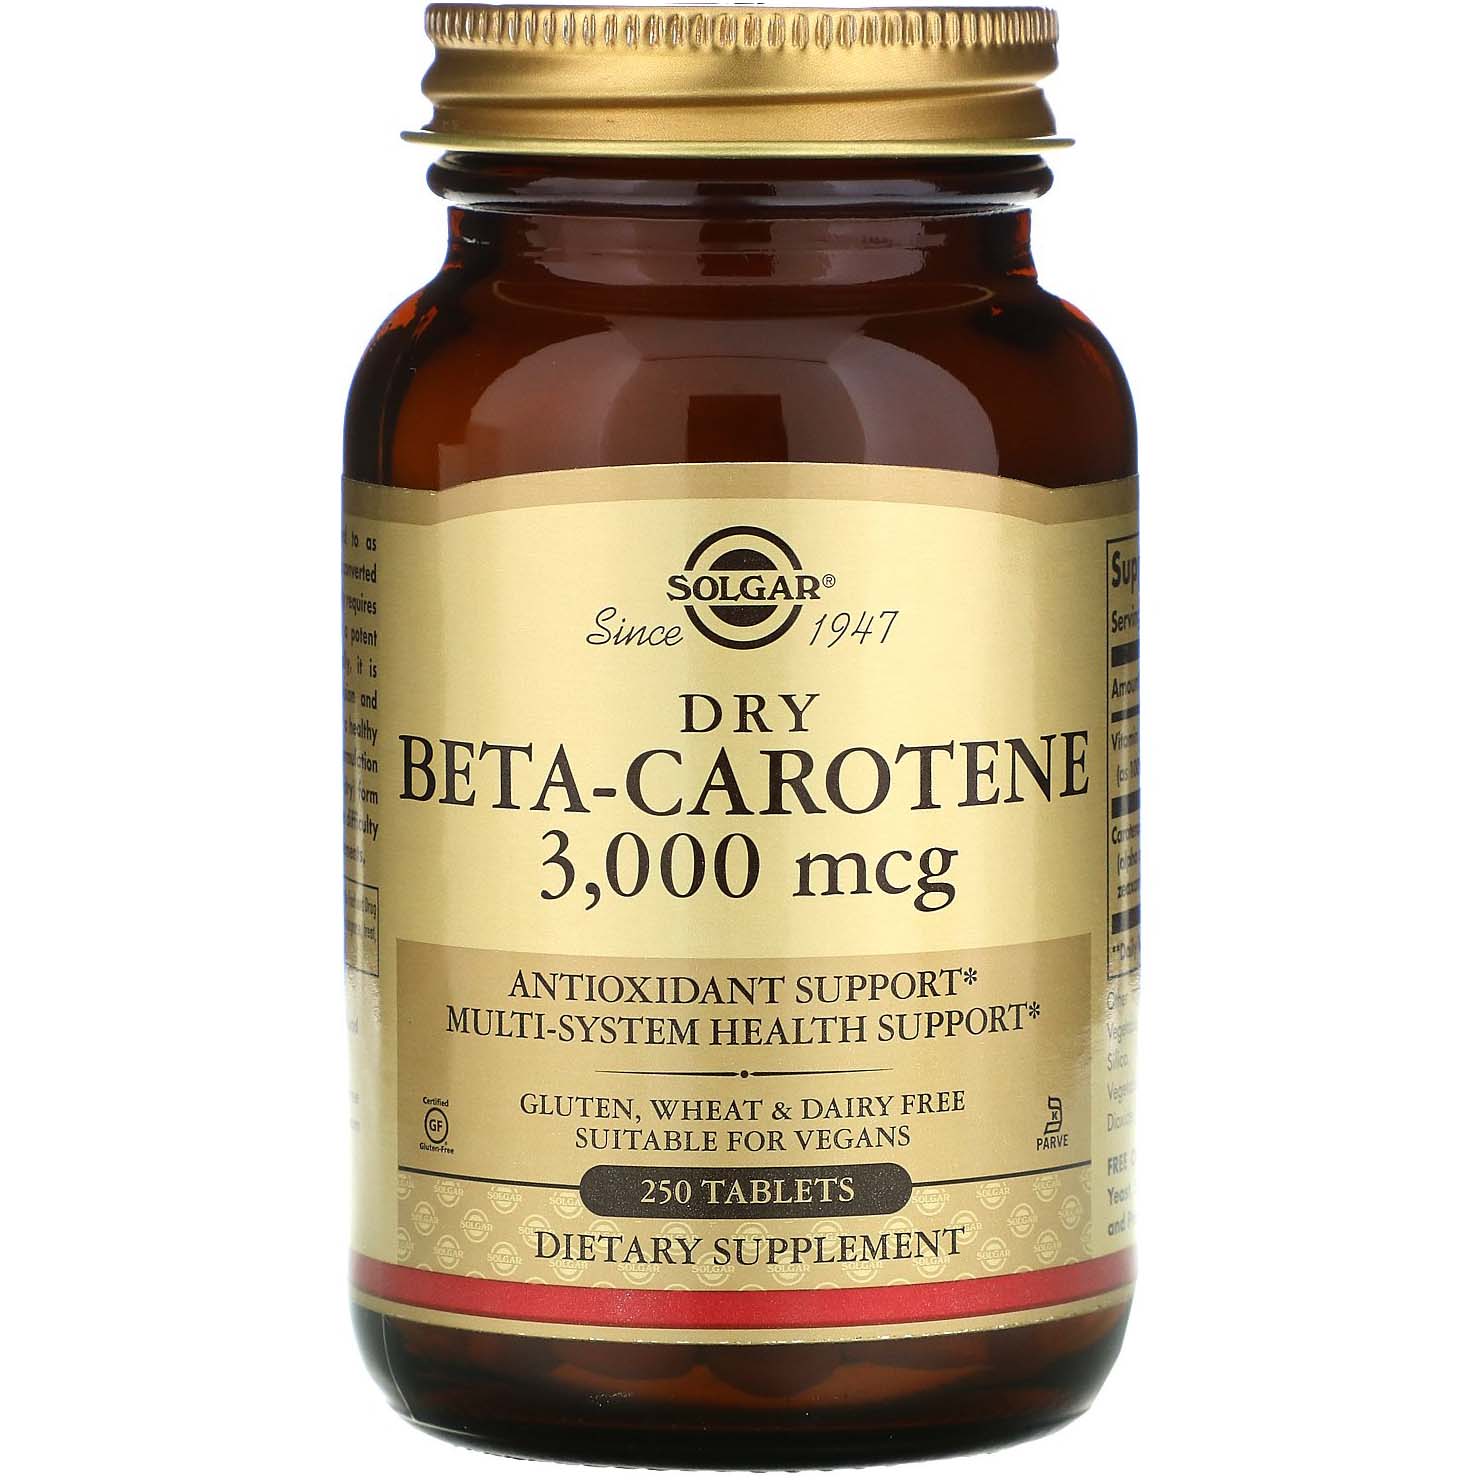 Solgar Dry Beta-carotene 250 Tablets 3000 mcg